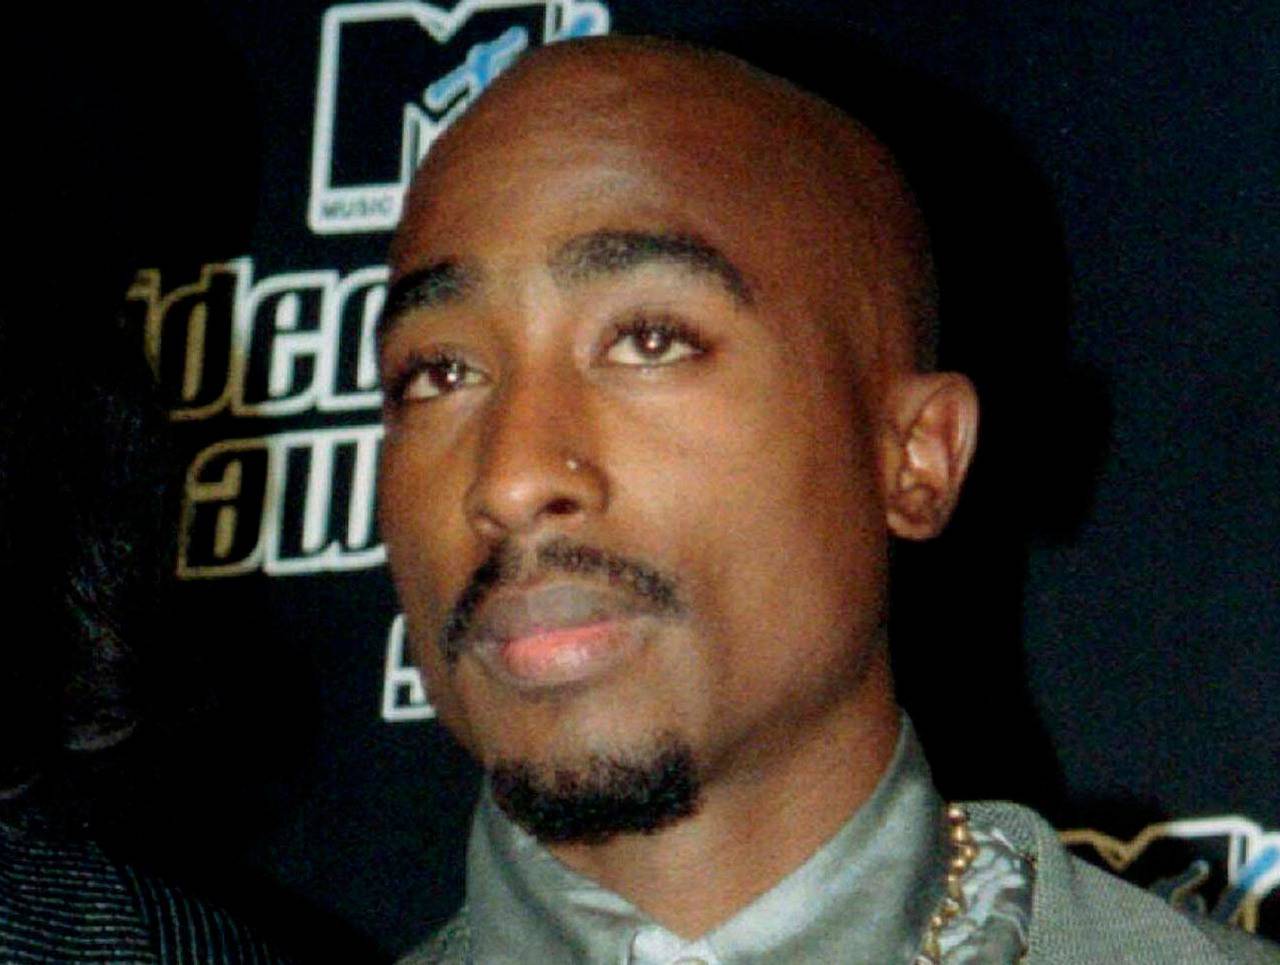 Steve McQueen priprema film o Tupacu: To će biti istinita priča